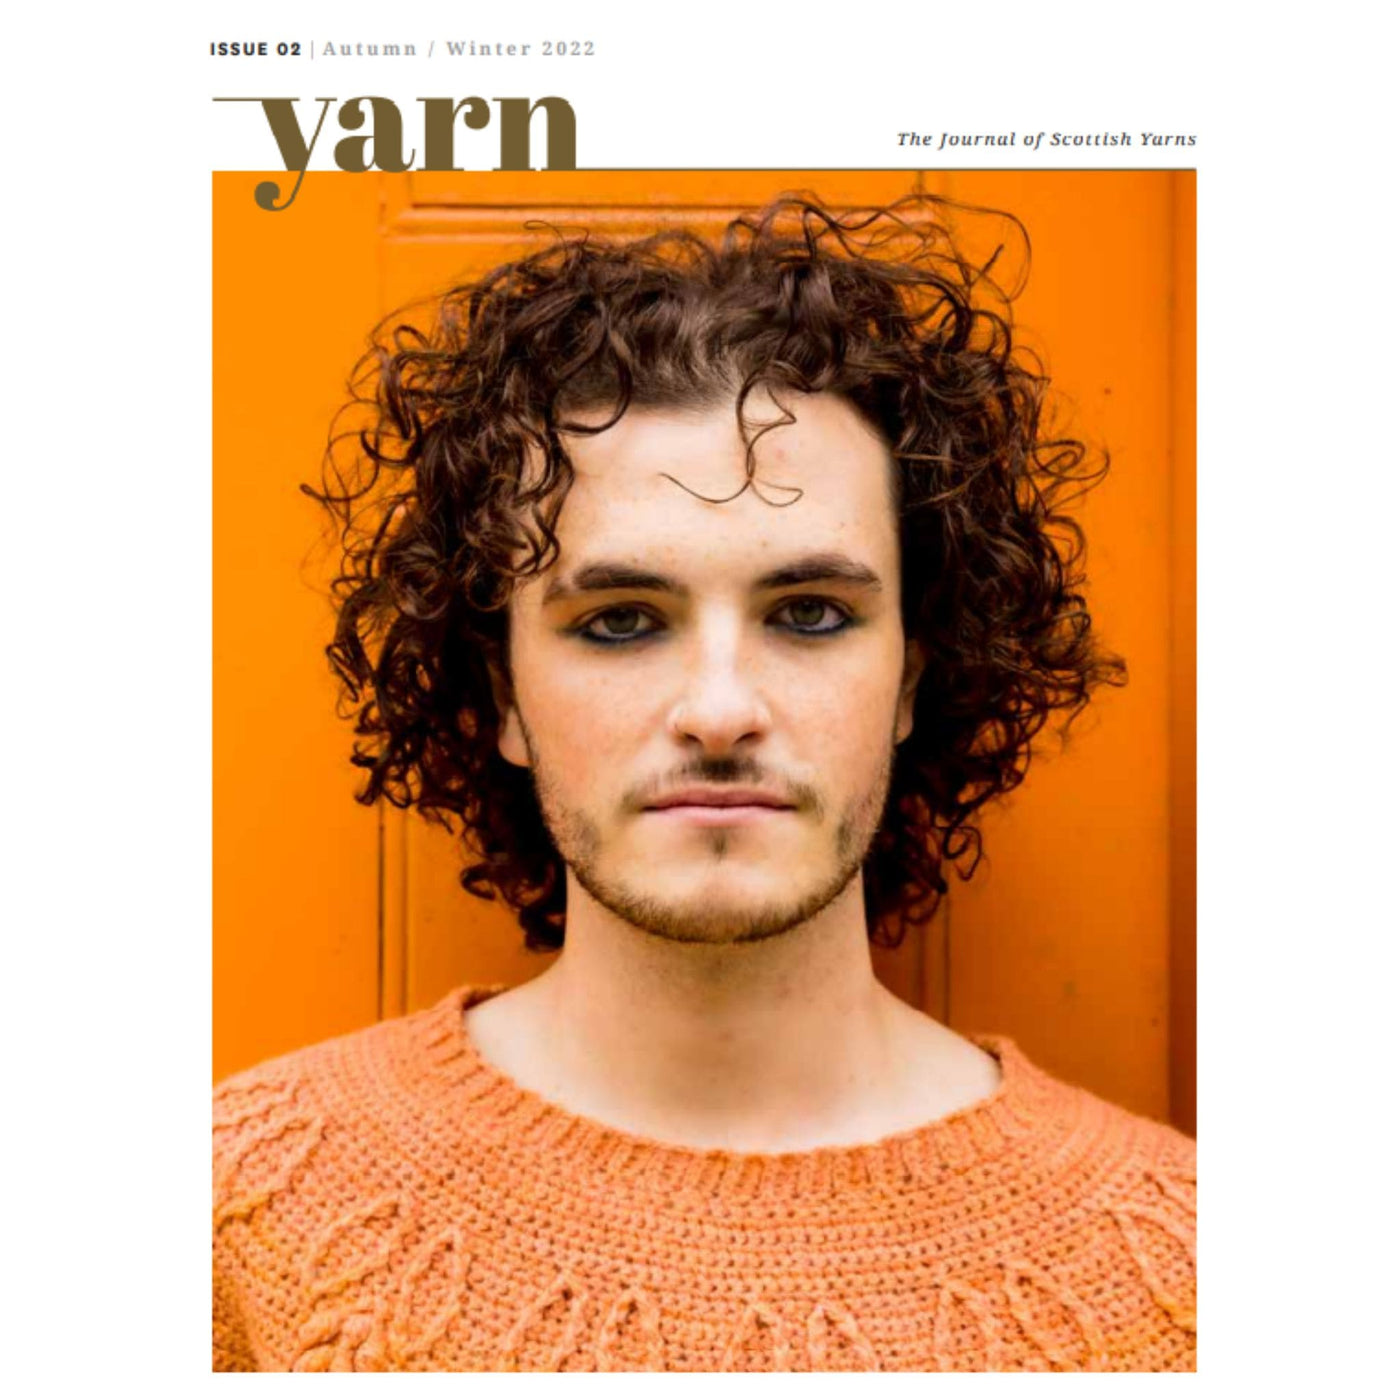 Yarn The Journal of Scottish Yarns cover shows portrait of model wearing orange sweater against orange background.